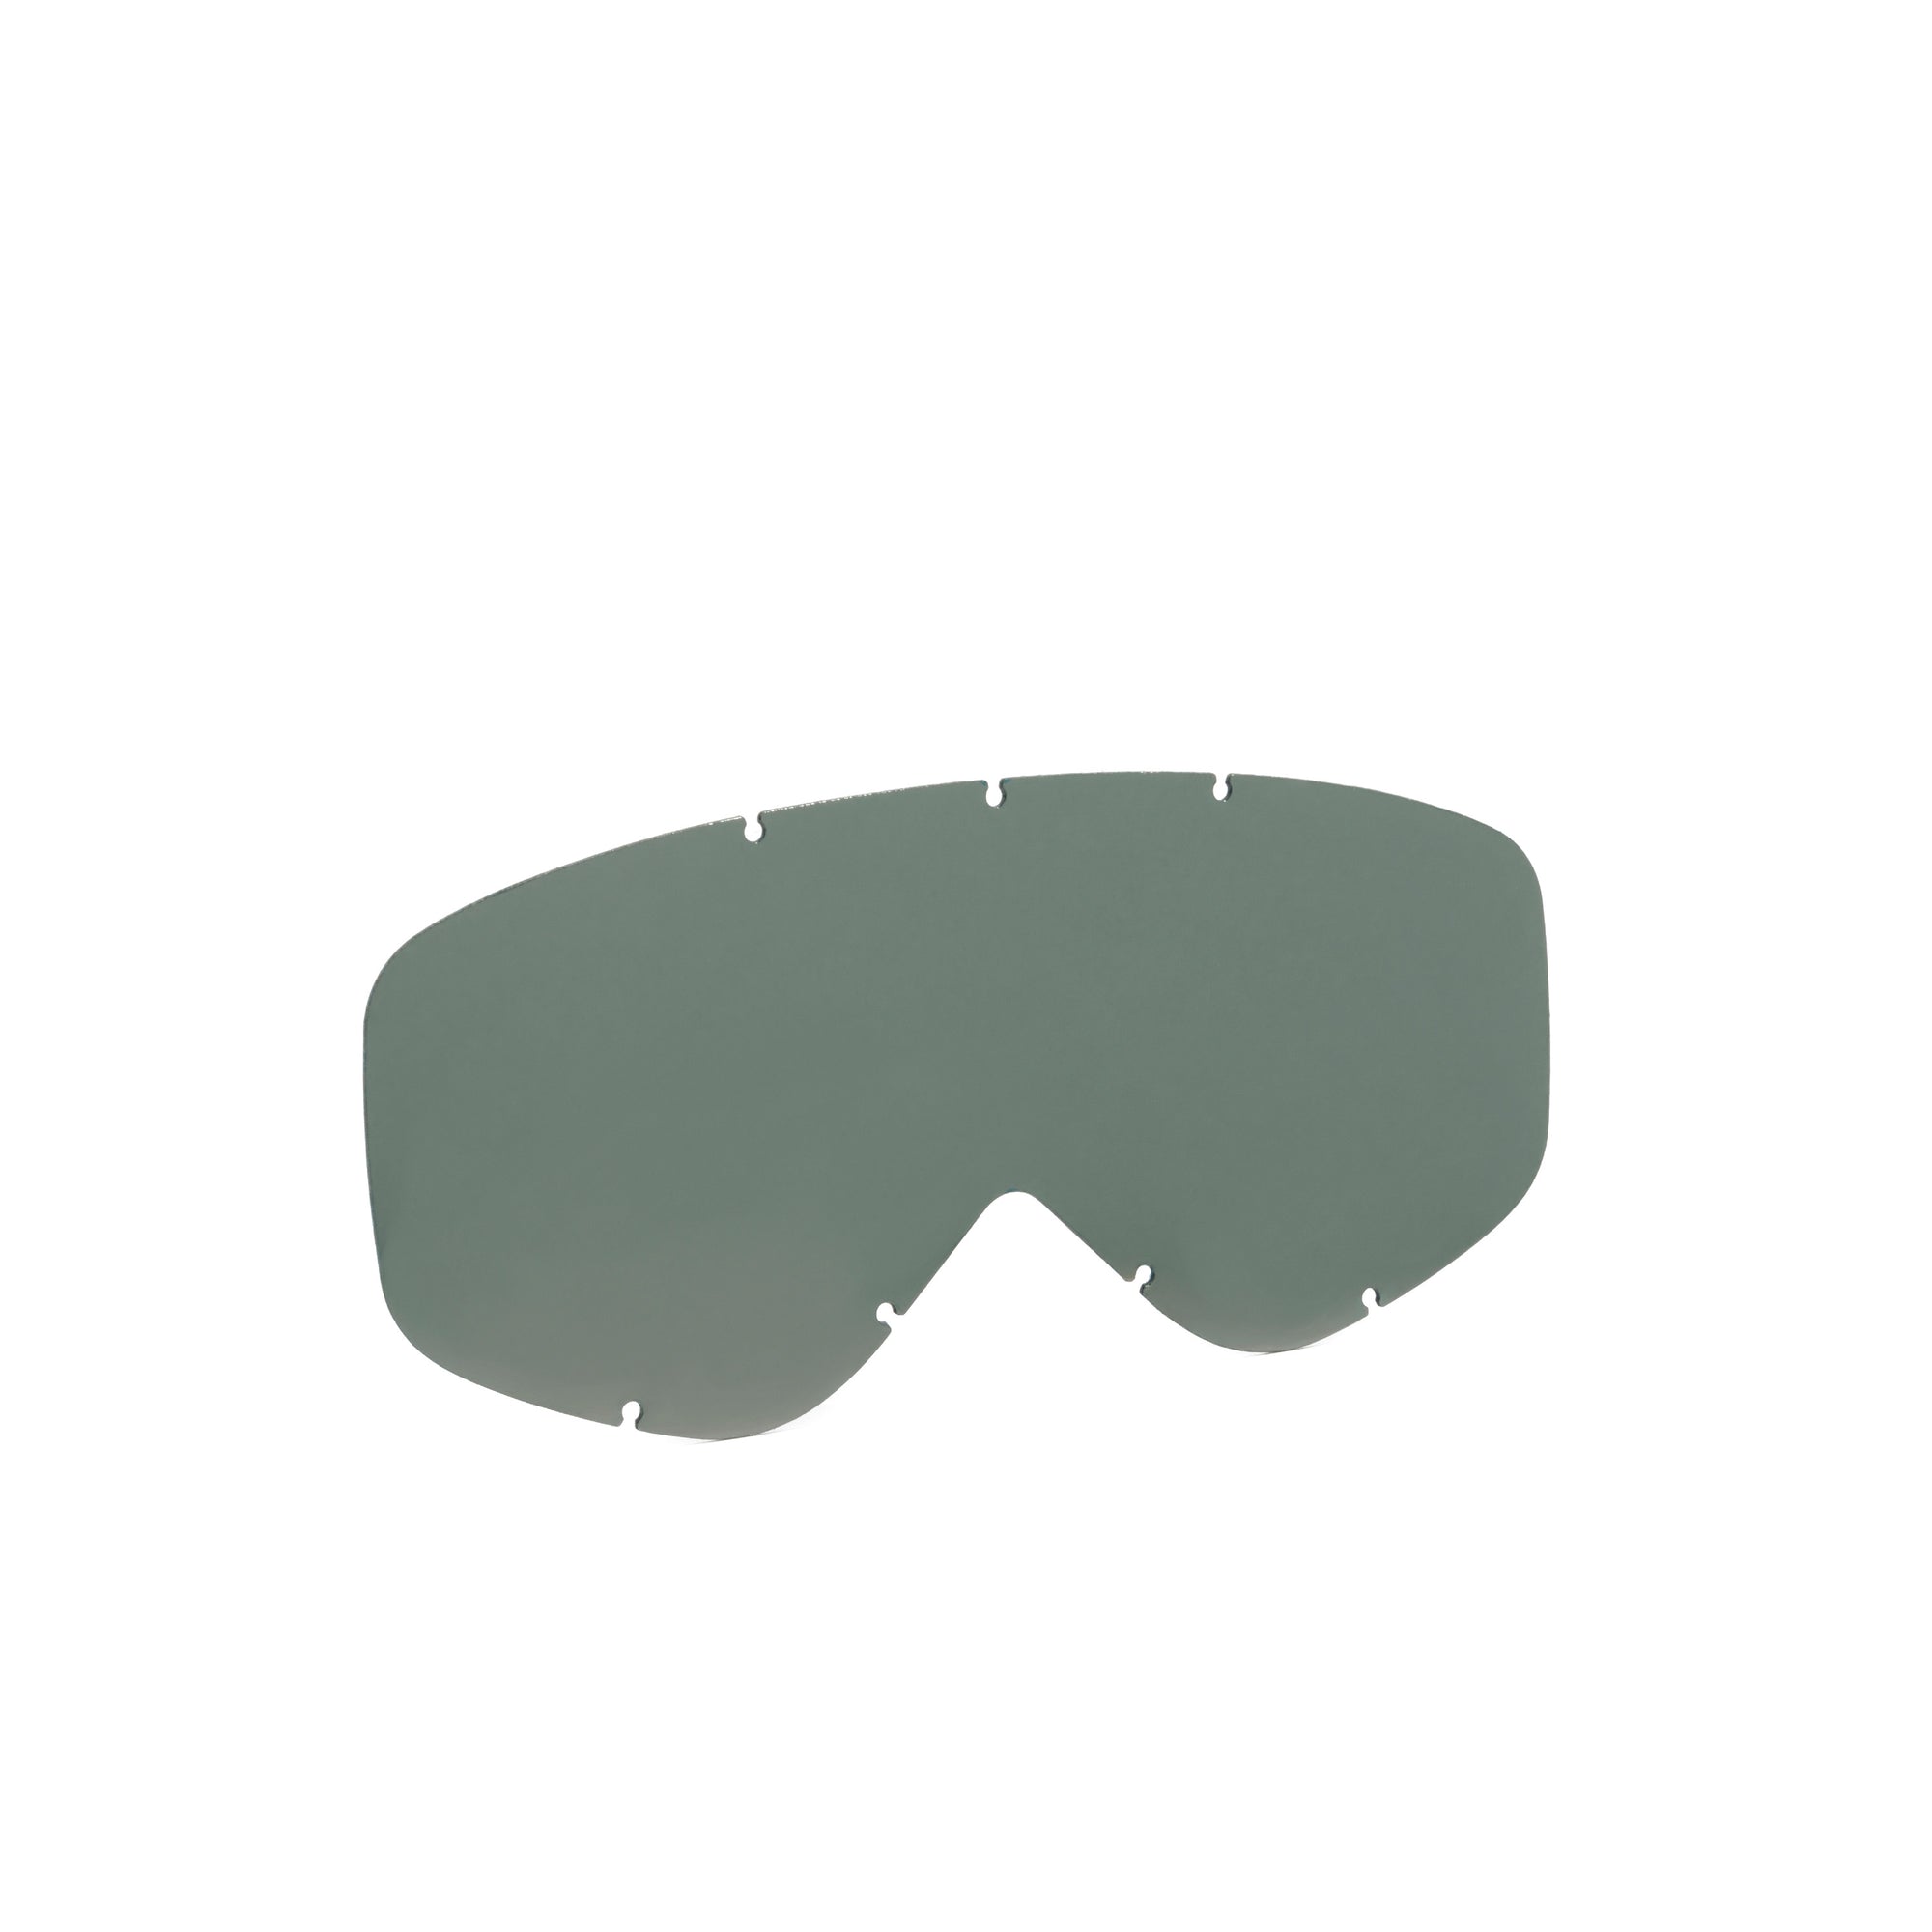 Wonderfy Single Lens - Goggles Spare Lenses|LEWONJS21